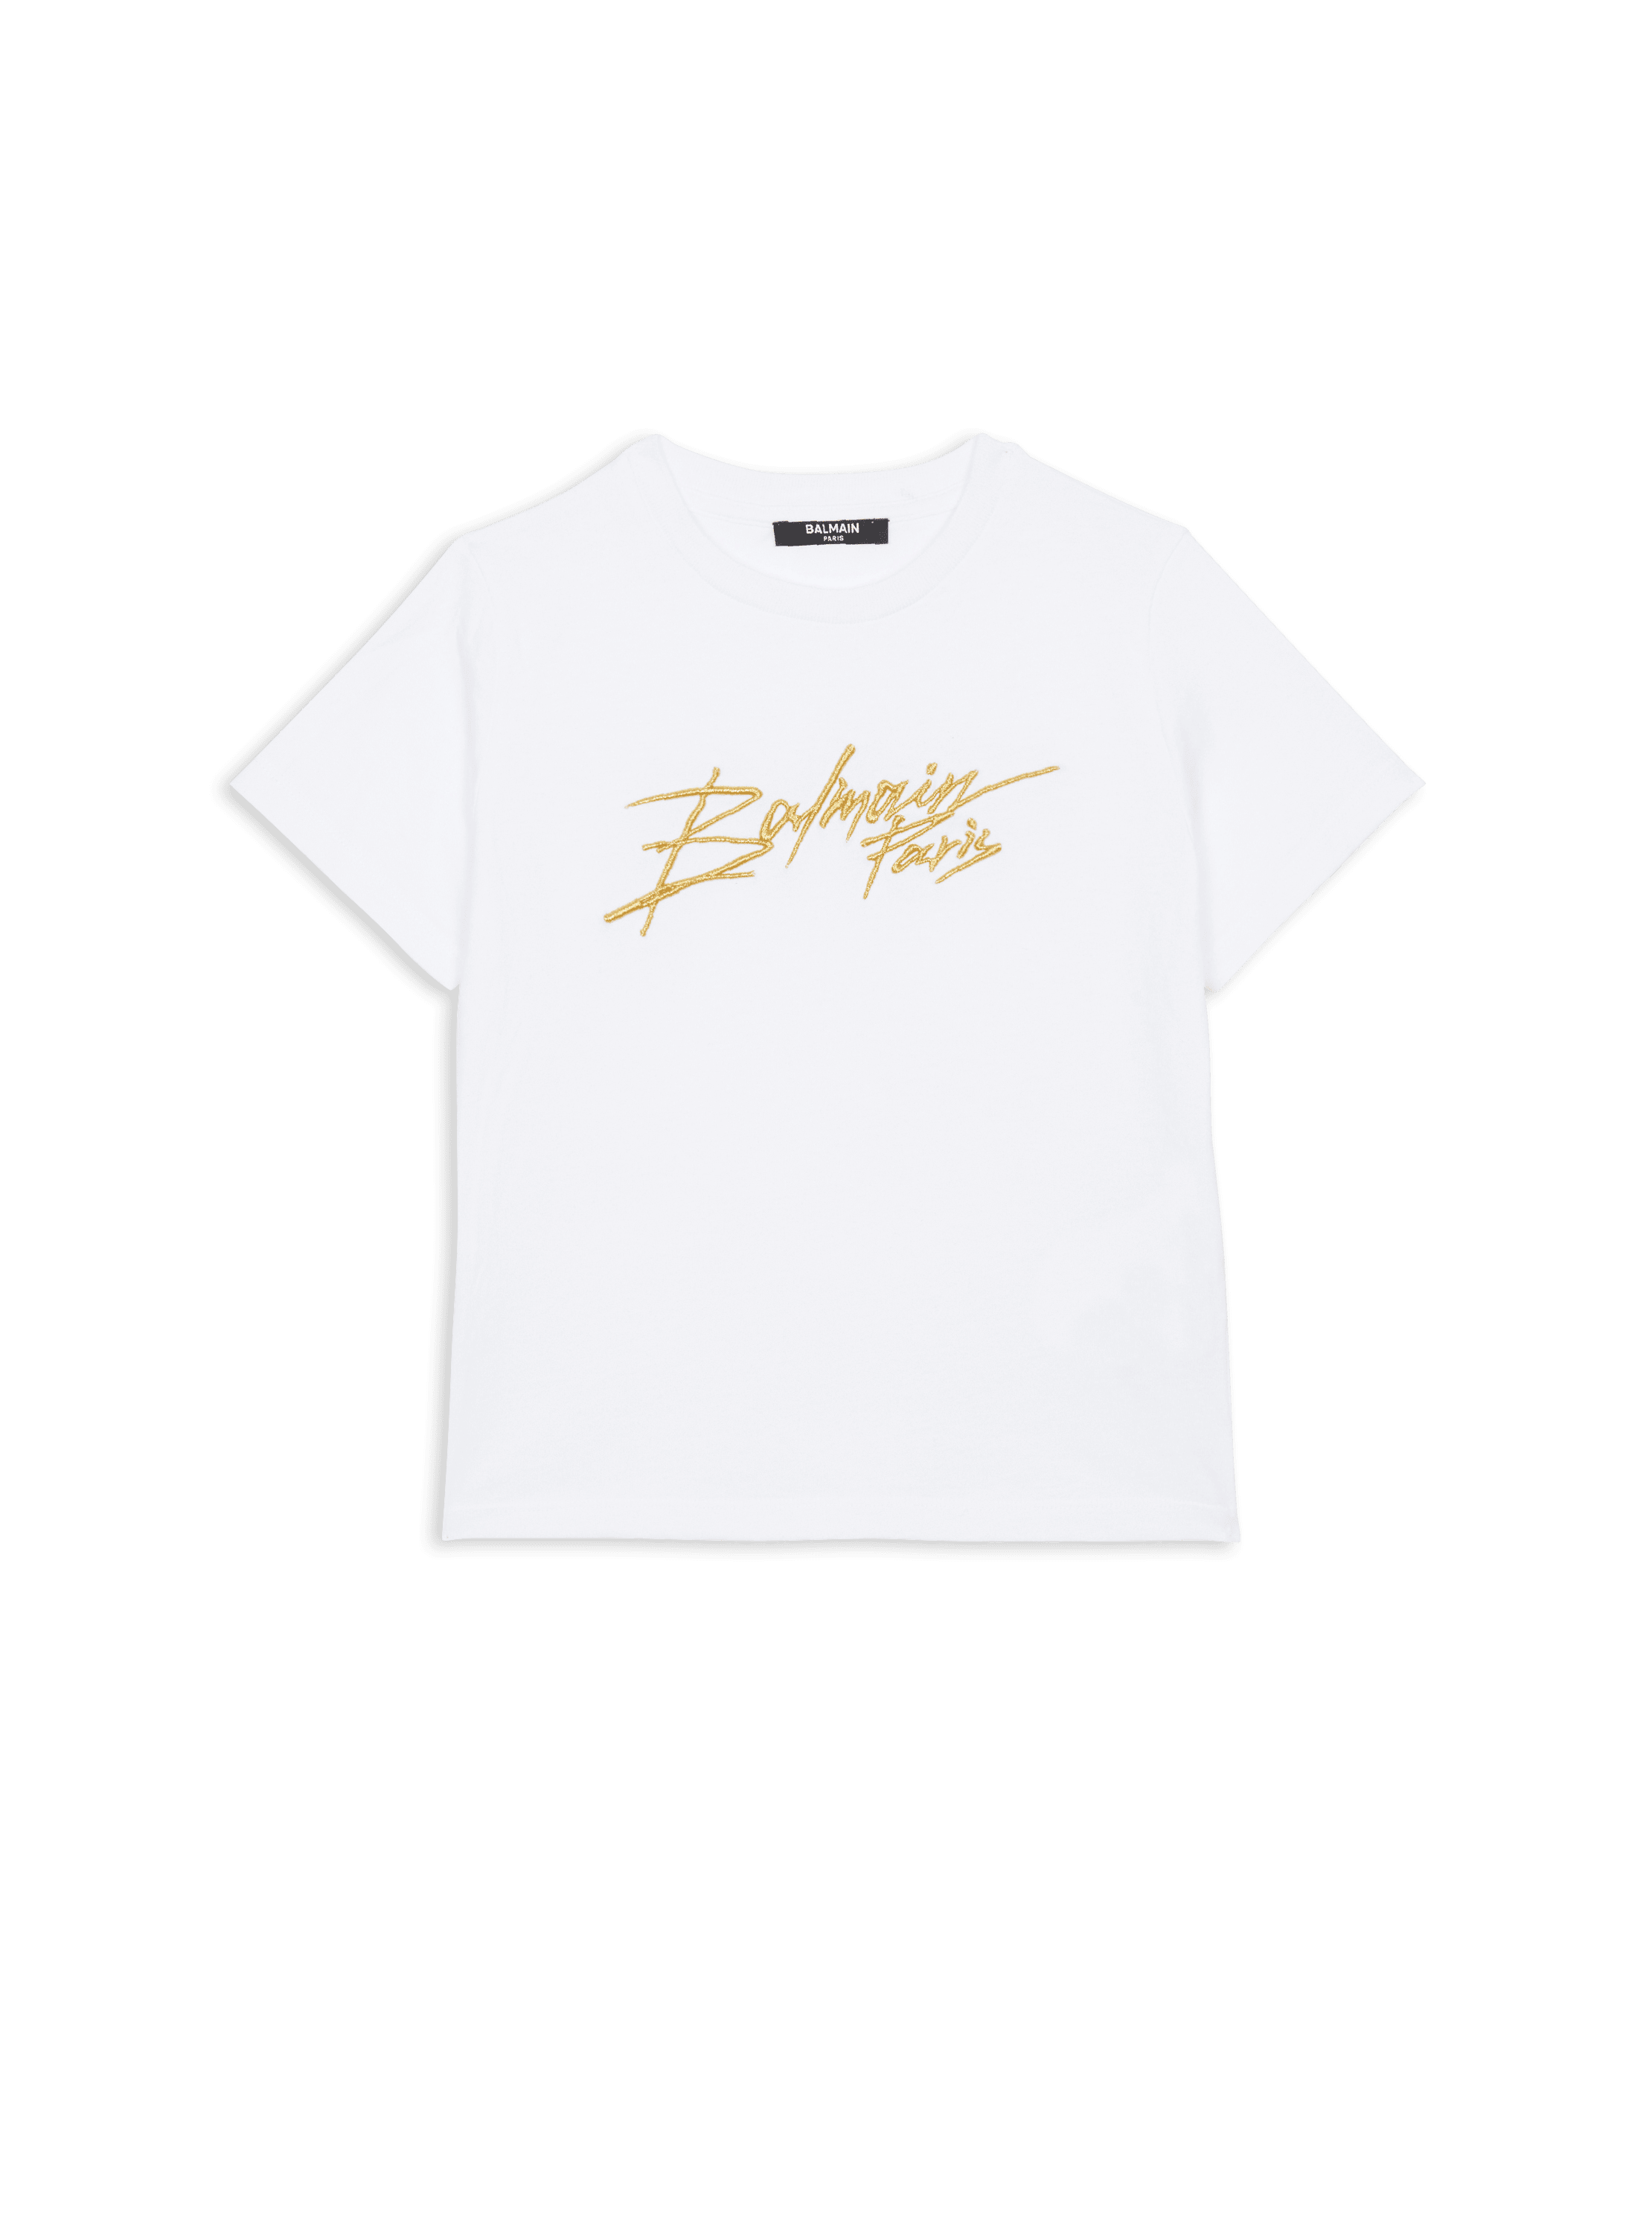 Balmain Signature T-Shirt